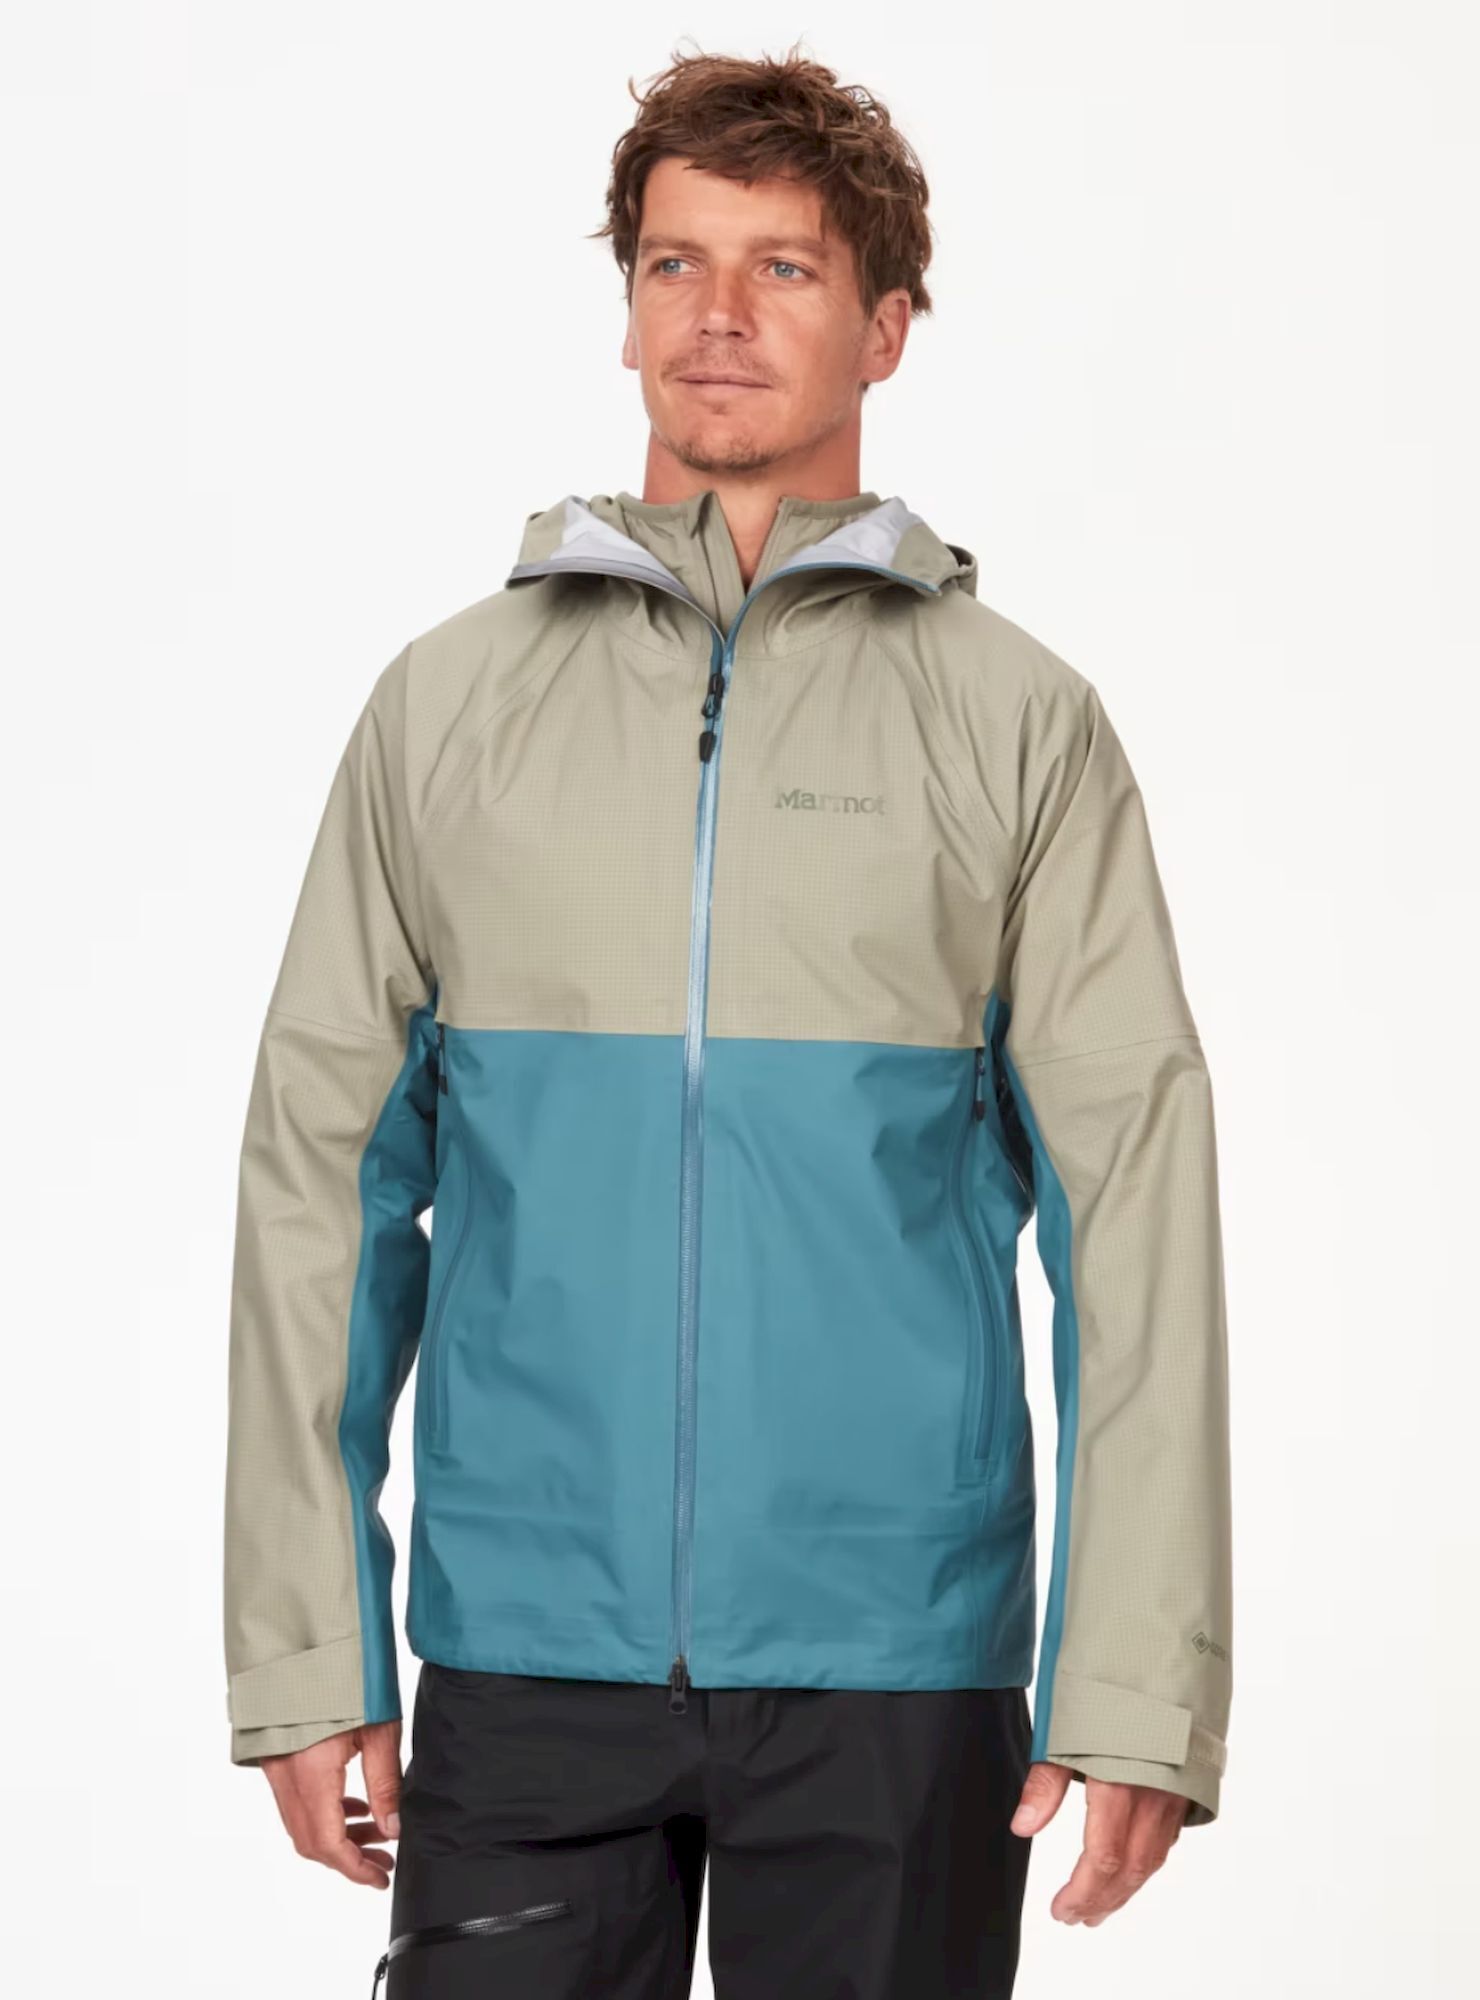 Marmot Mitre Peak Jacket - Waterproof jacket - Men's